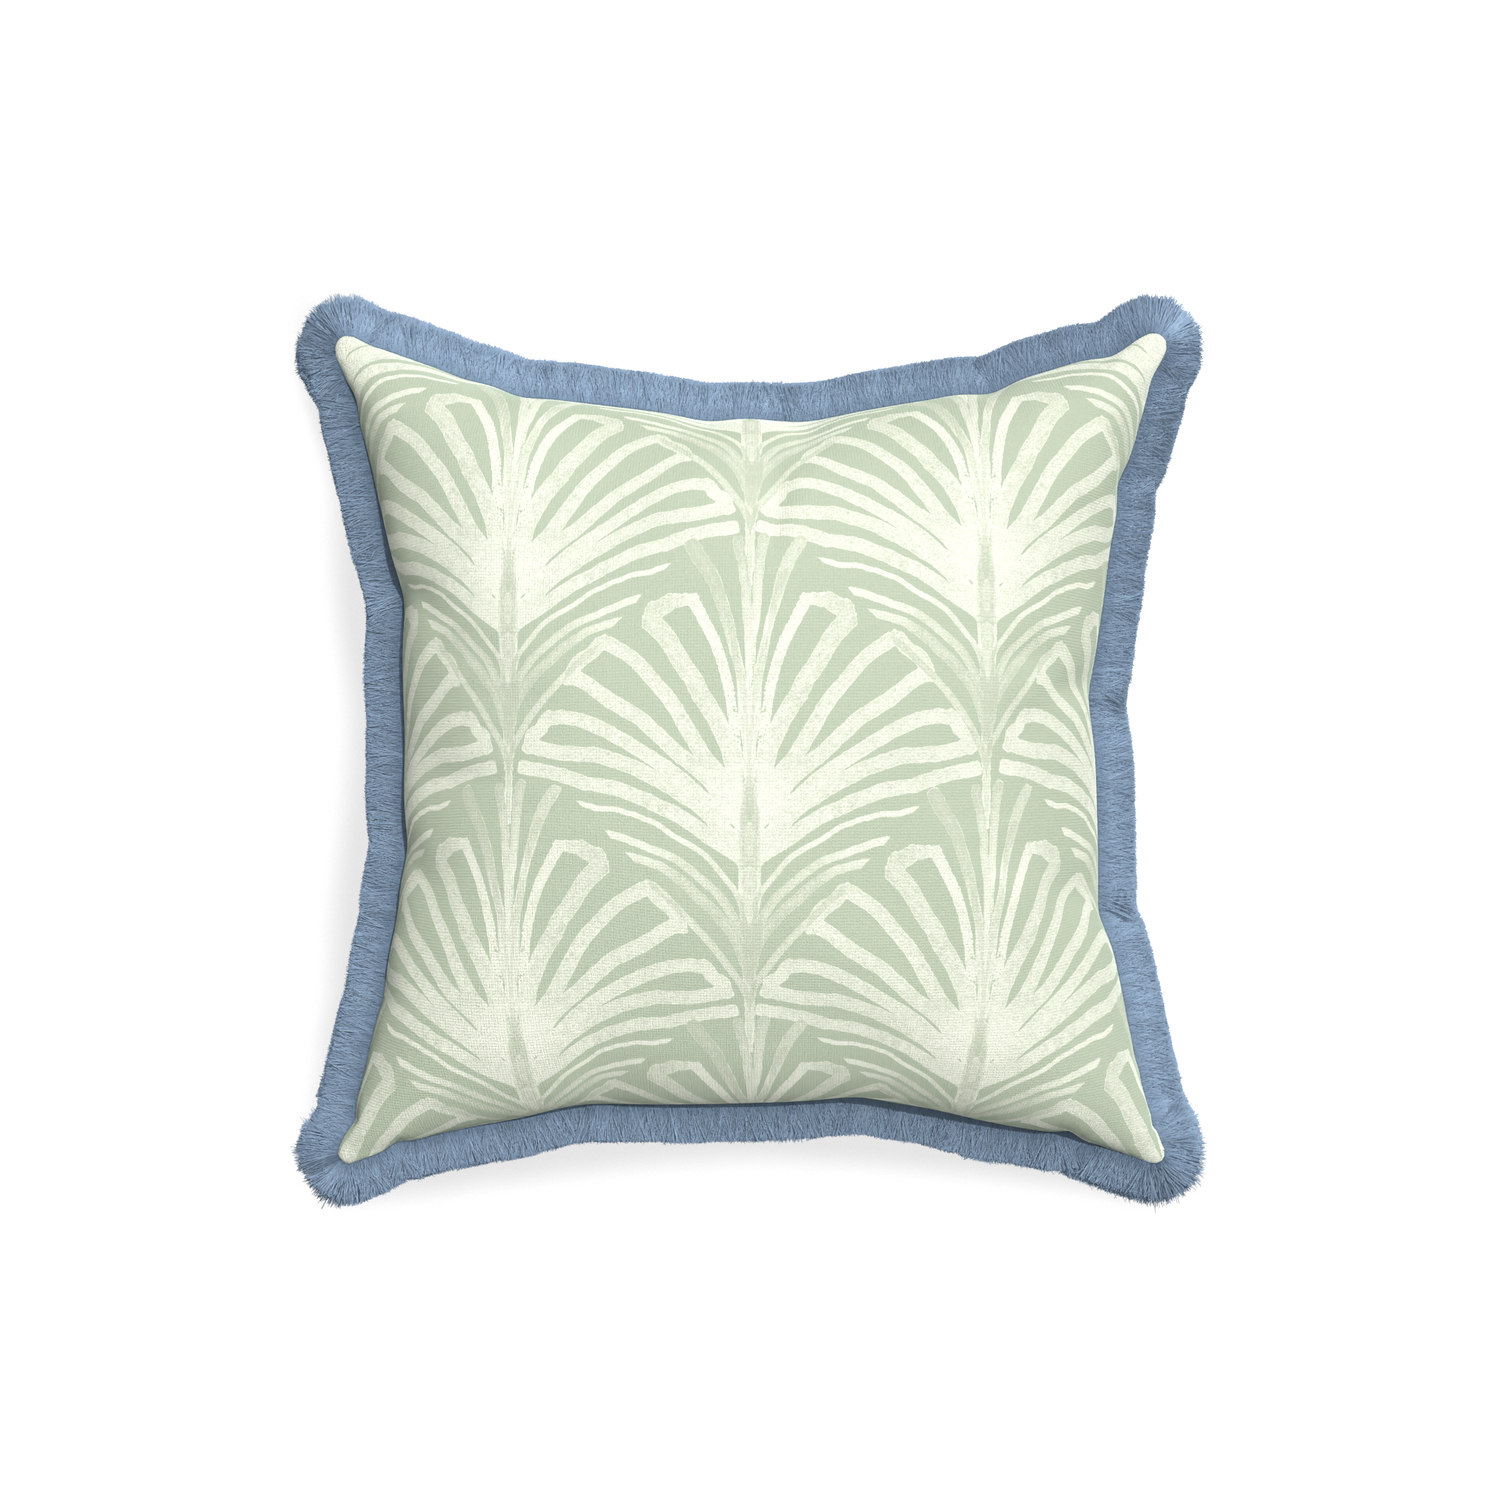 18-square suzy sage custom pillow with sky fringe on white background